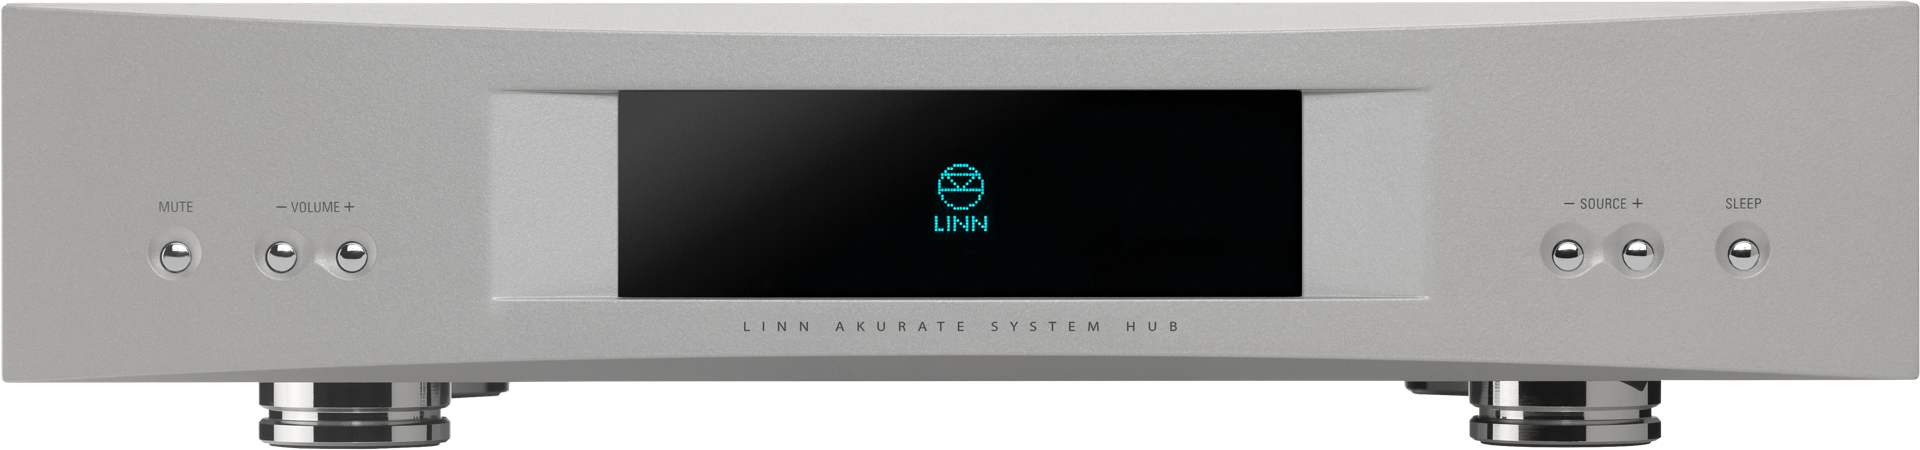 Linn Akurate System Hub network music player